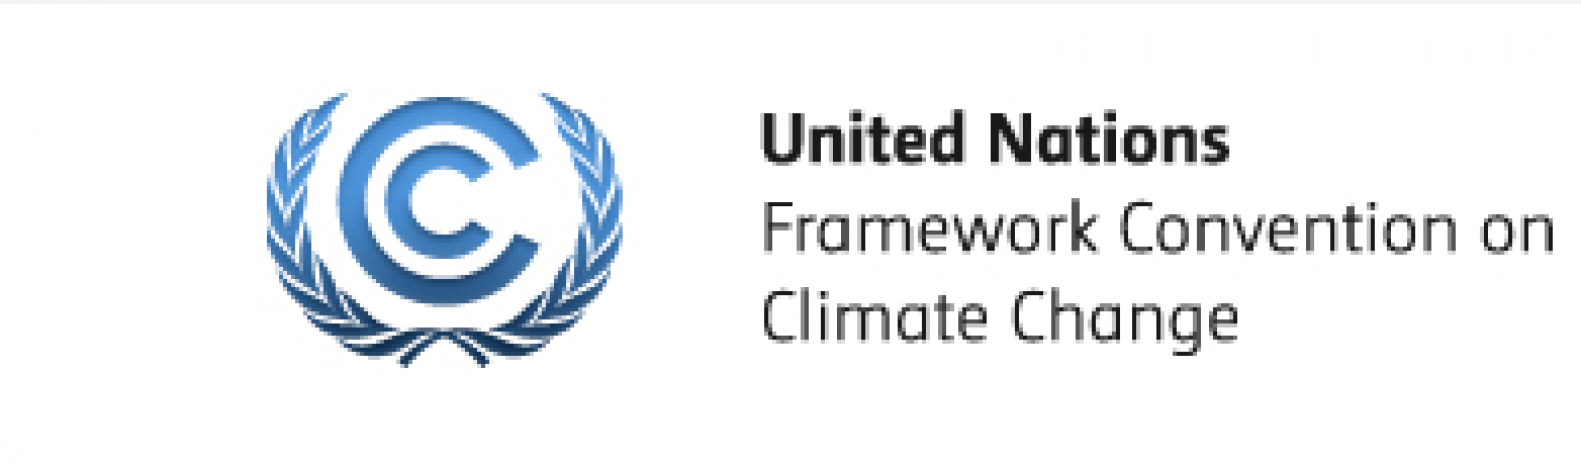 Ркик оон. Рамочная конвенция ООН об изменении климата. Эмблема ООН по изменению климата.  Конвенция ООН по изменению климата (UNFCCC).